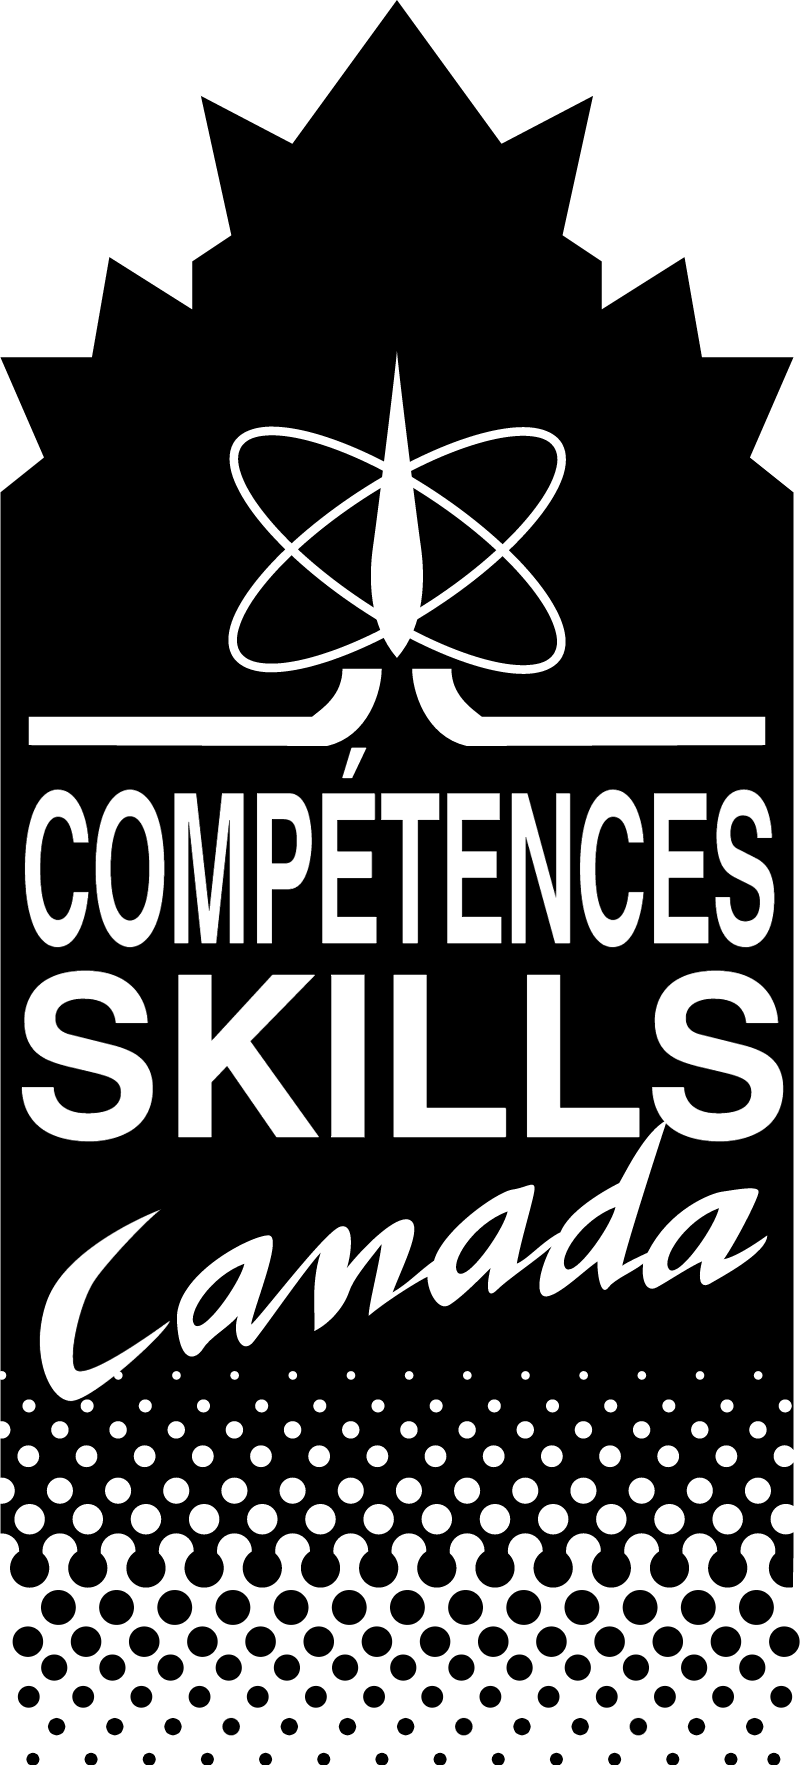 Competence Skills Canada vector